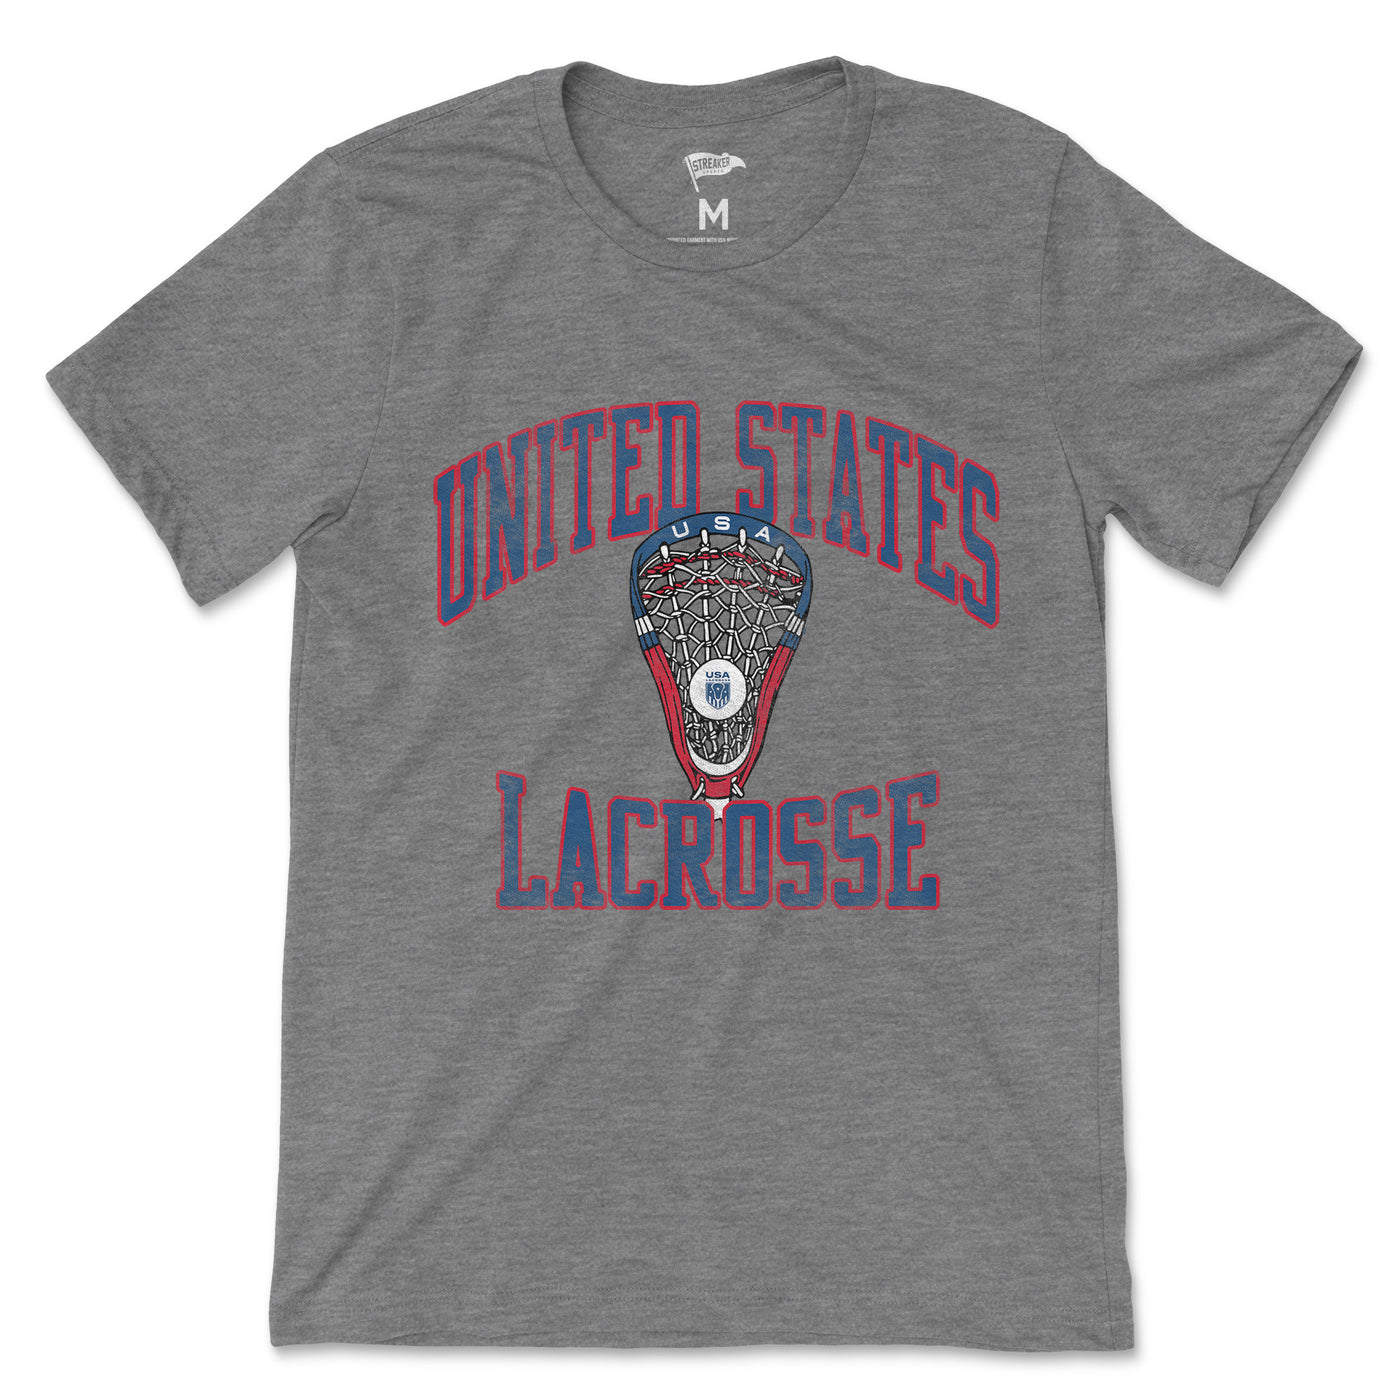 USA Lacrosse Retro Stick Tee - Streaker Sports